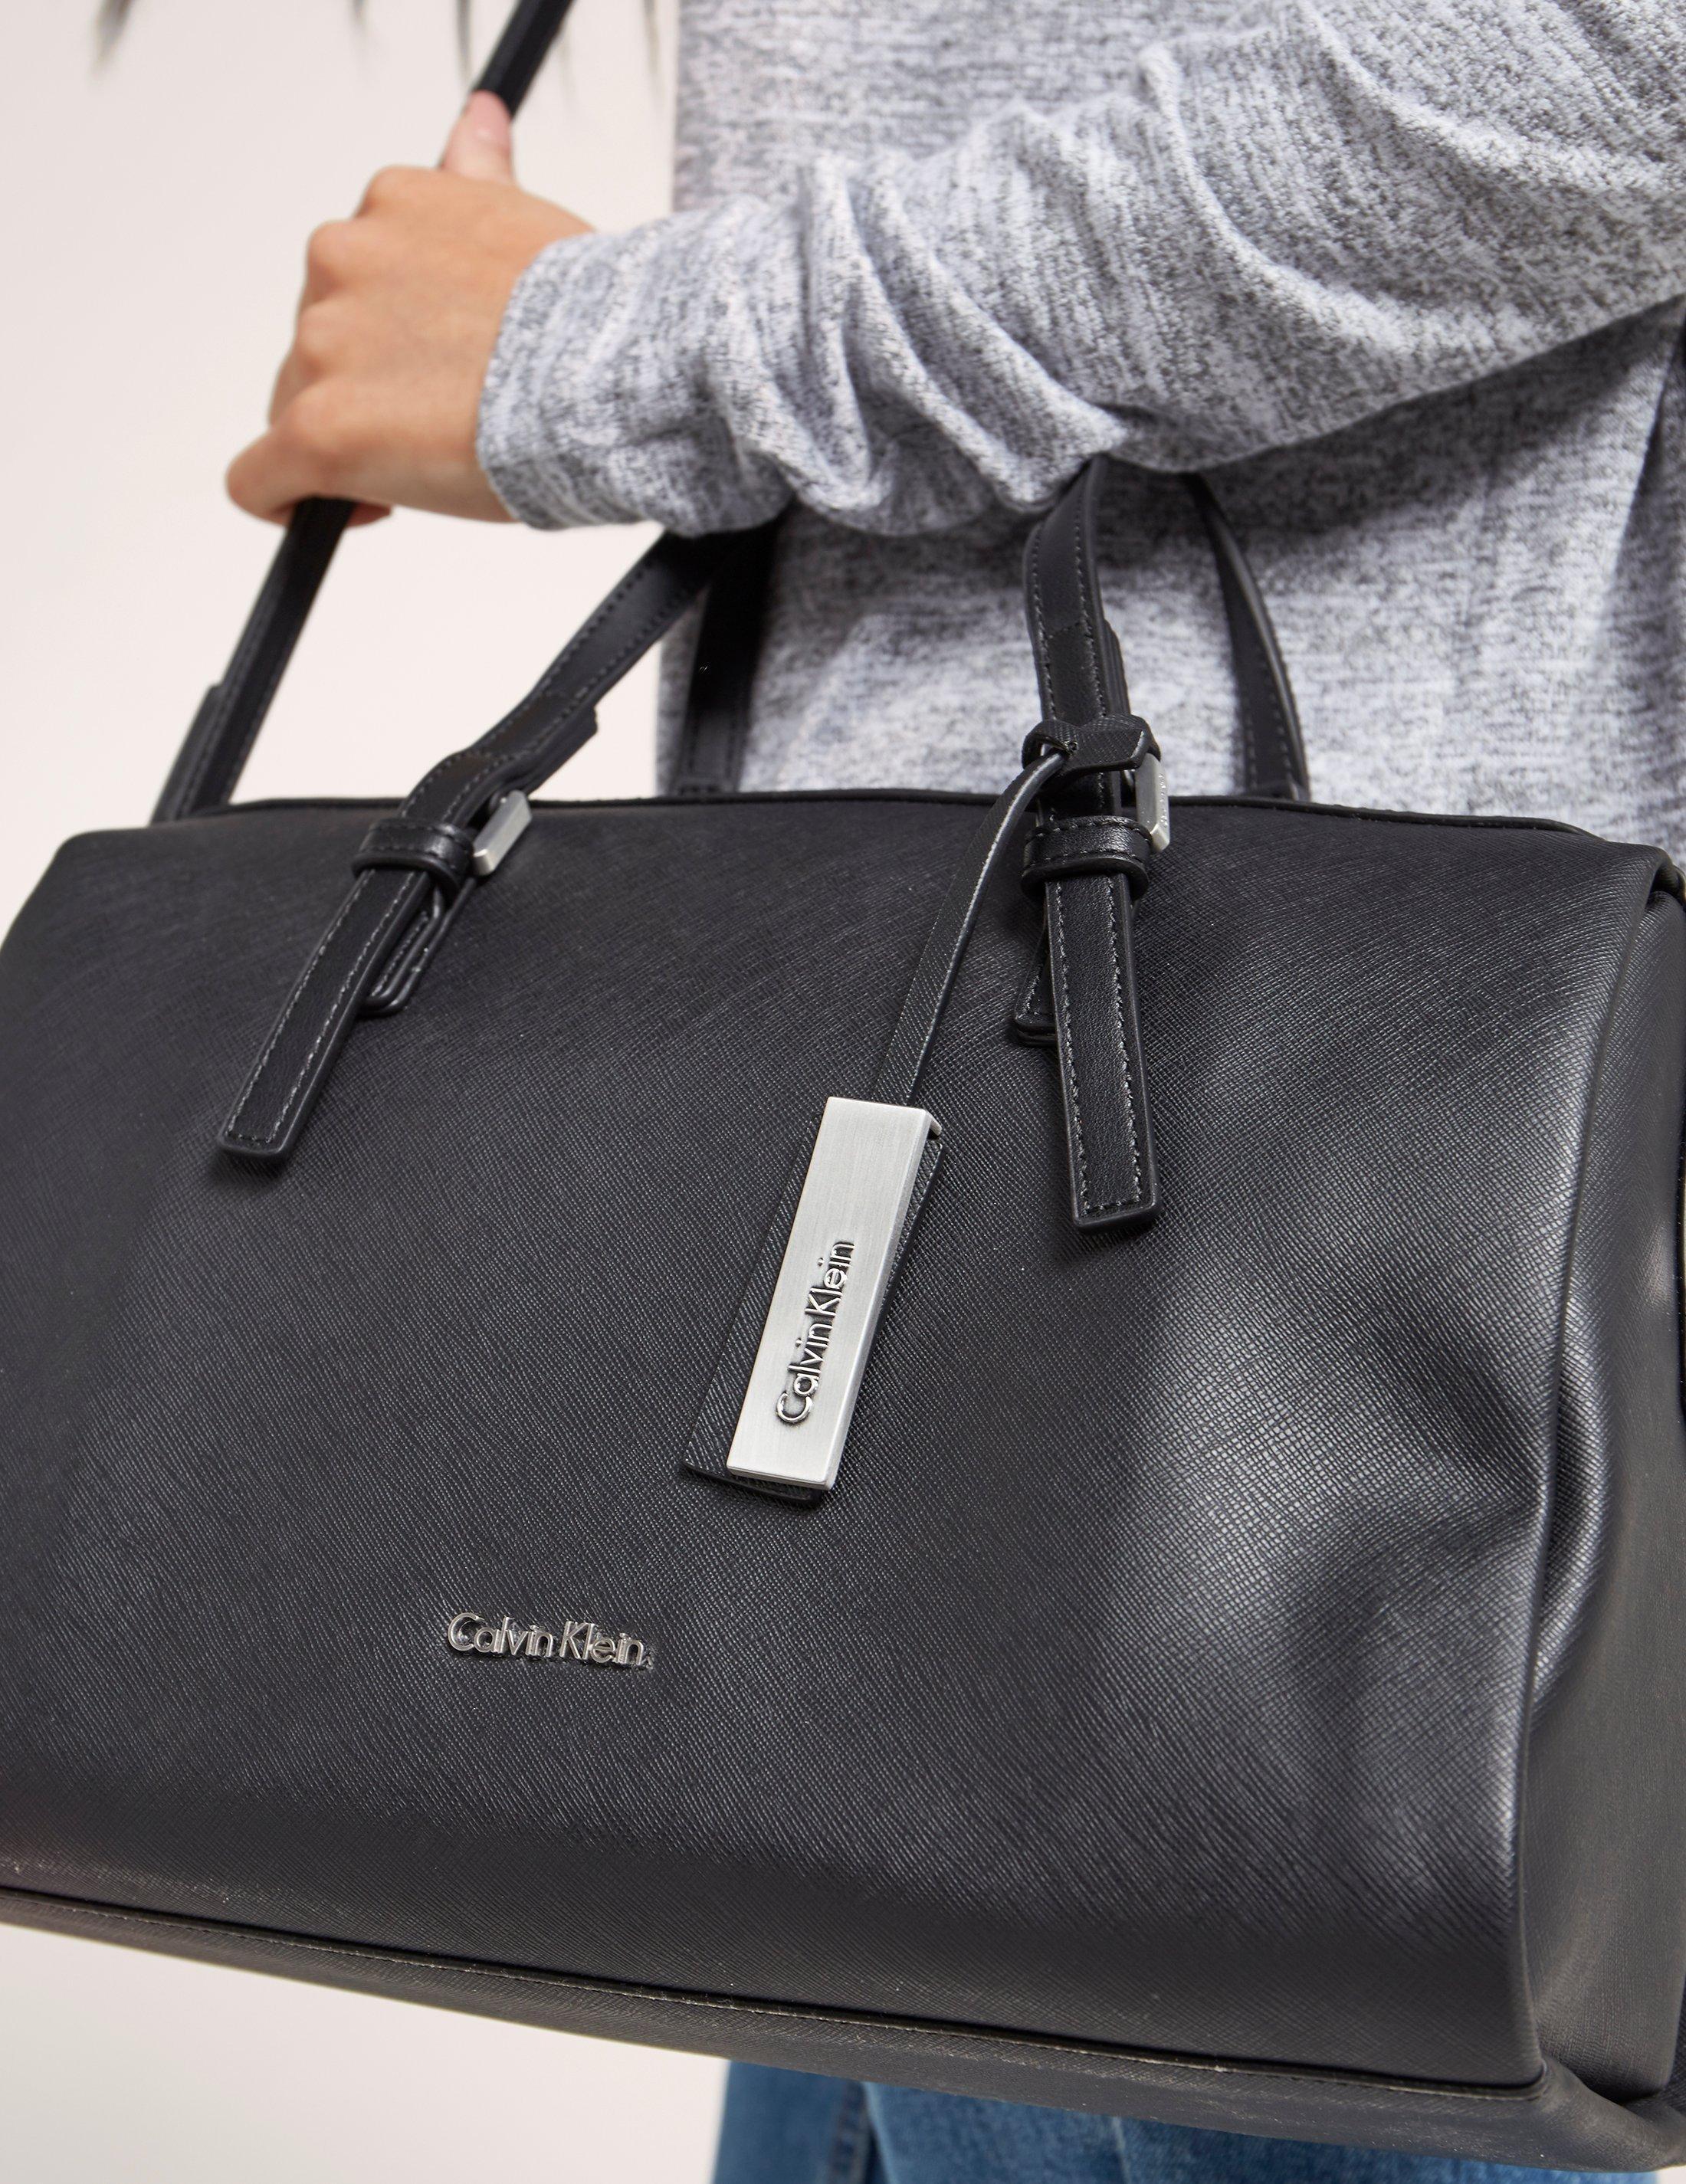 Calvin Klein Marissa Duffle Bag in Black - Lyst